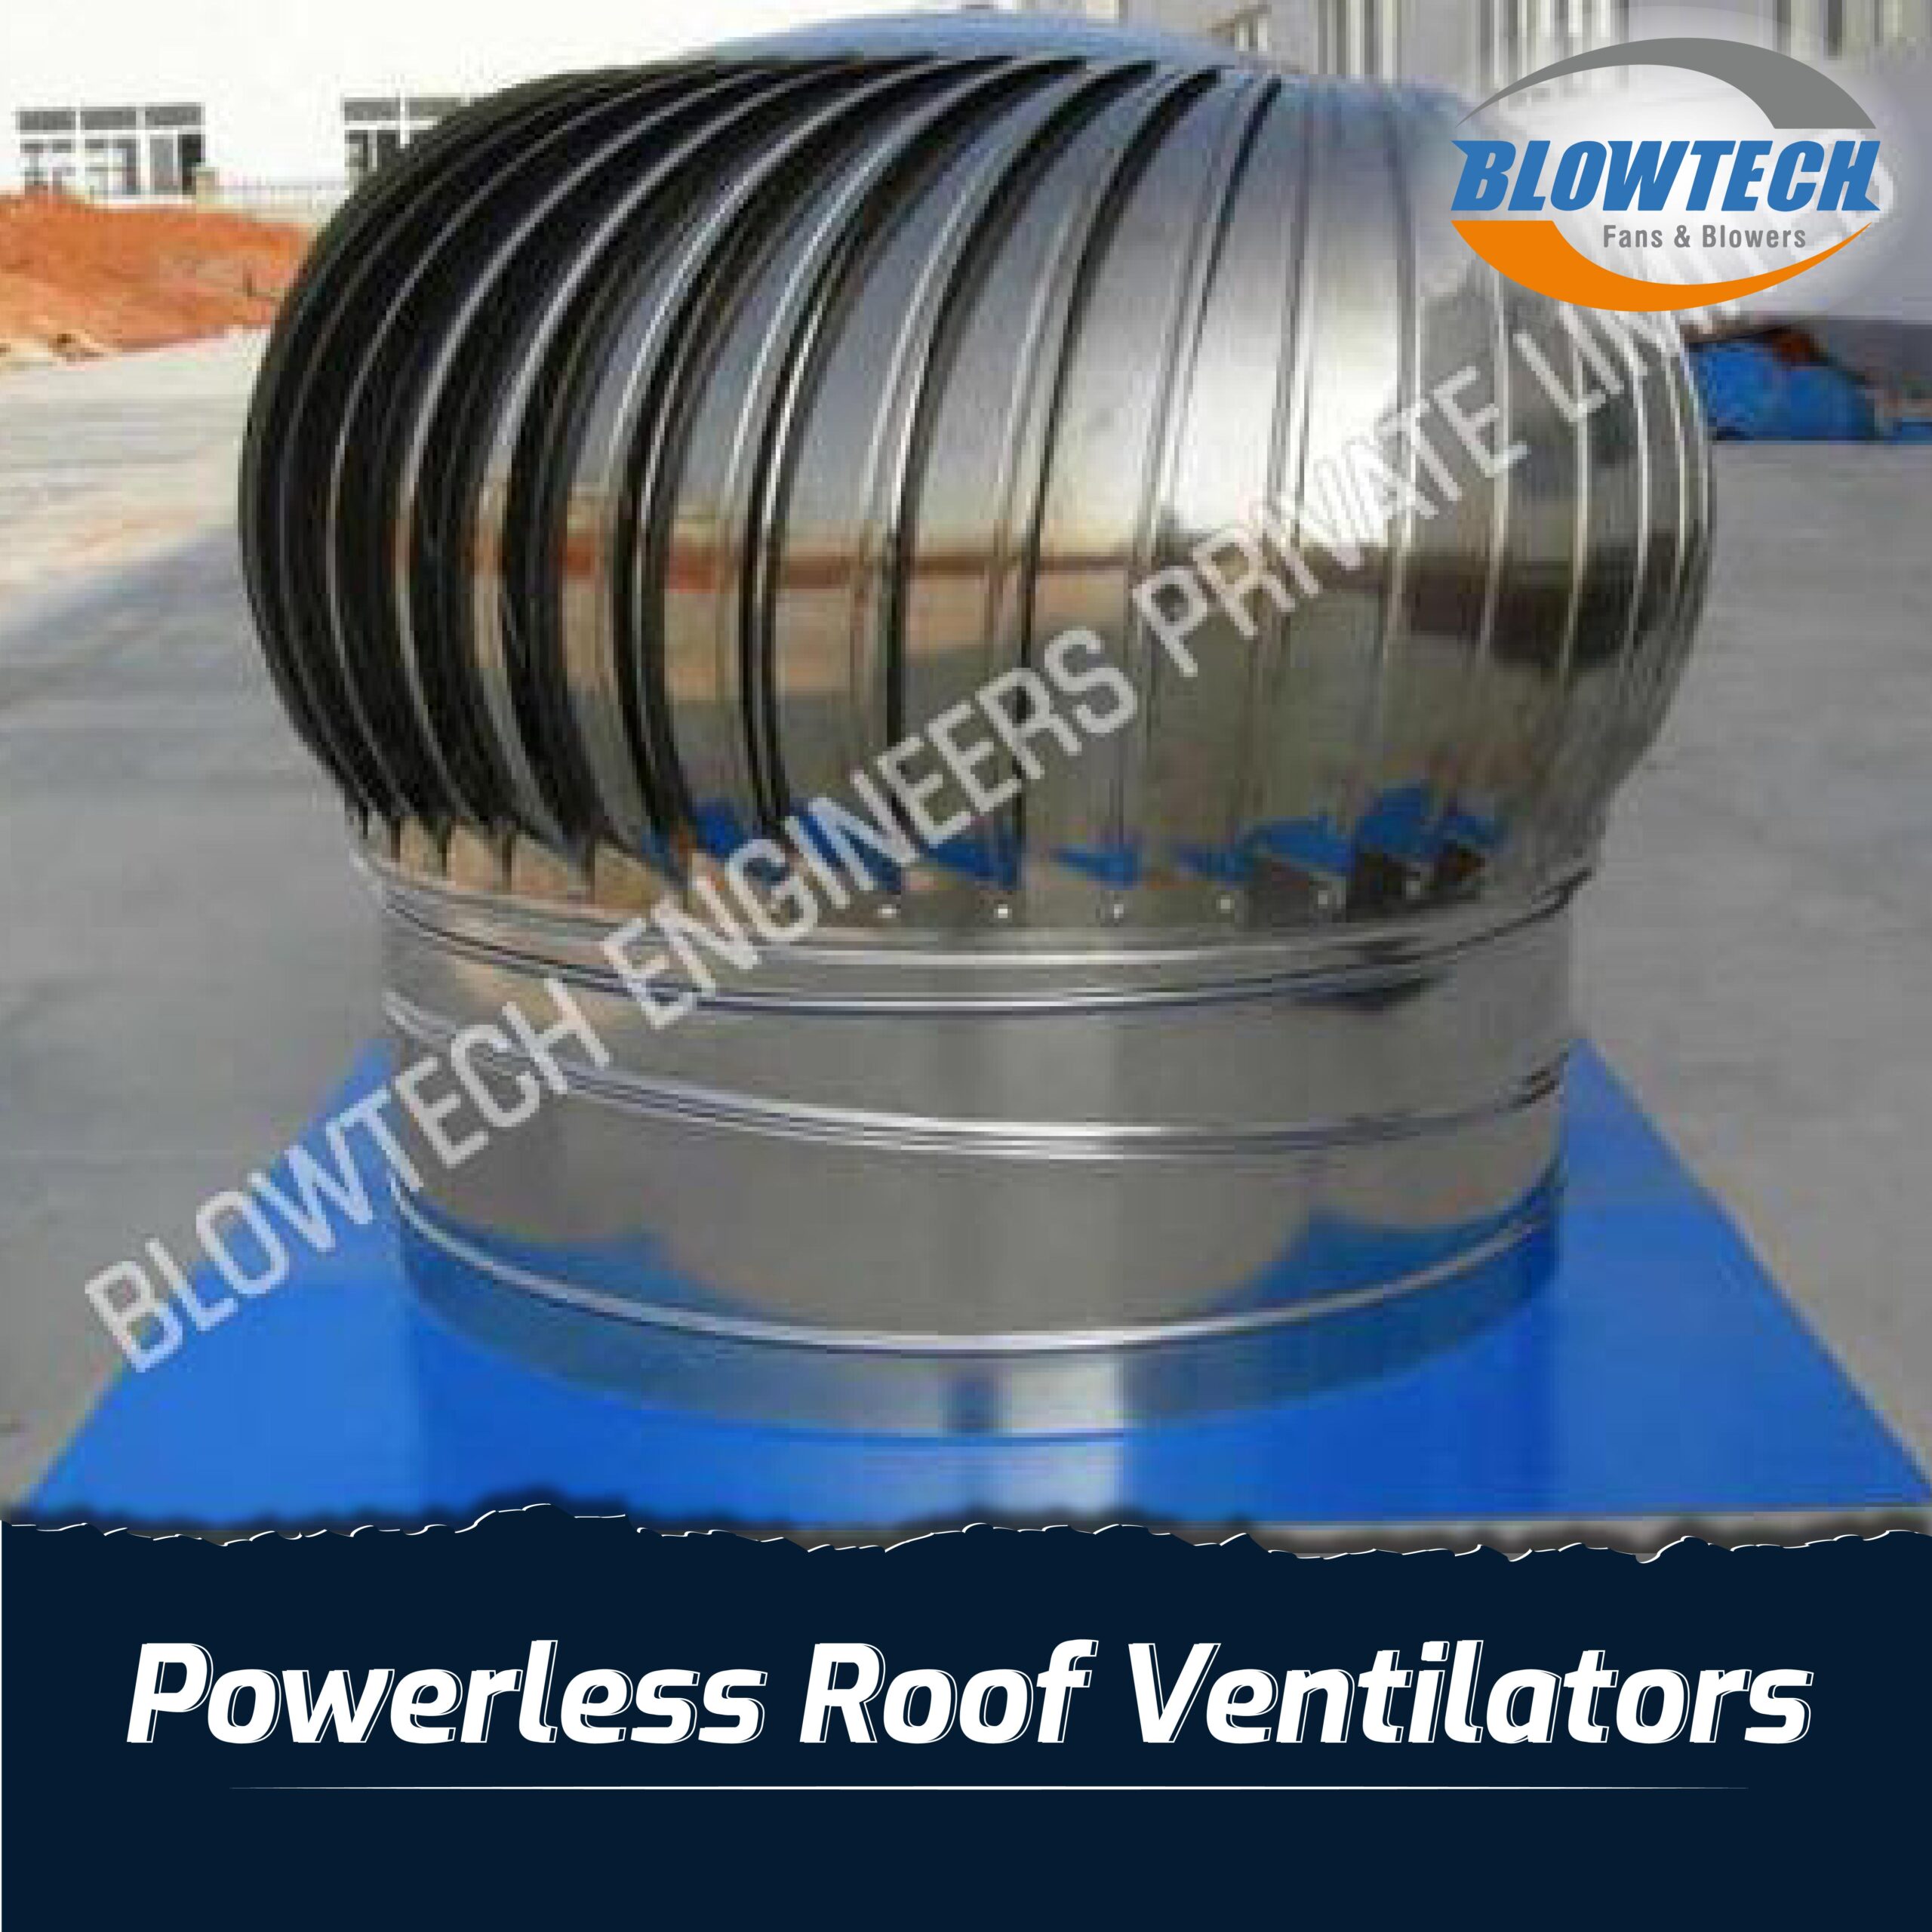 Powerless Roof Ventilators  manufacturer, supplier and exporter in Mumbai, India